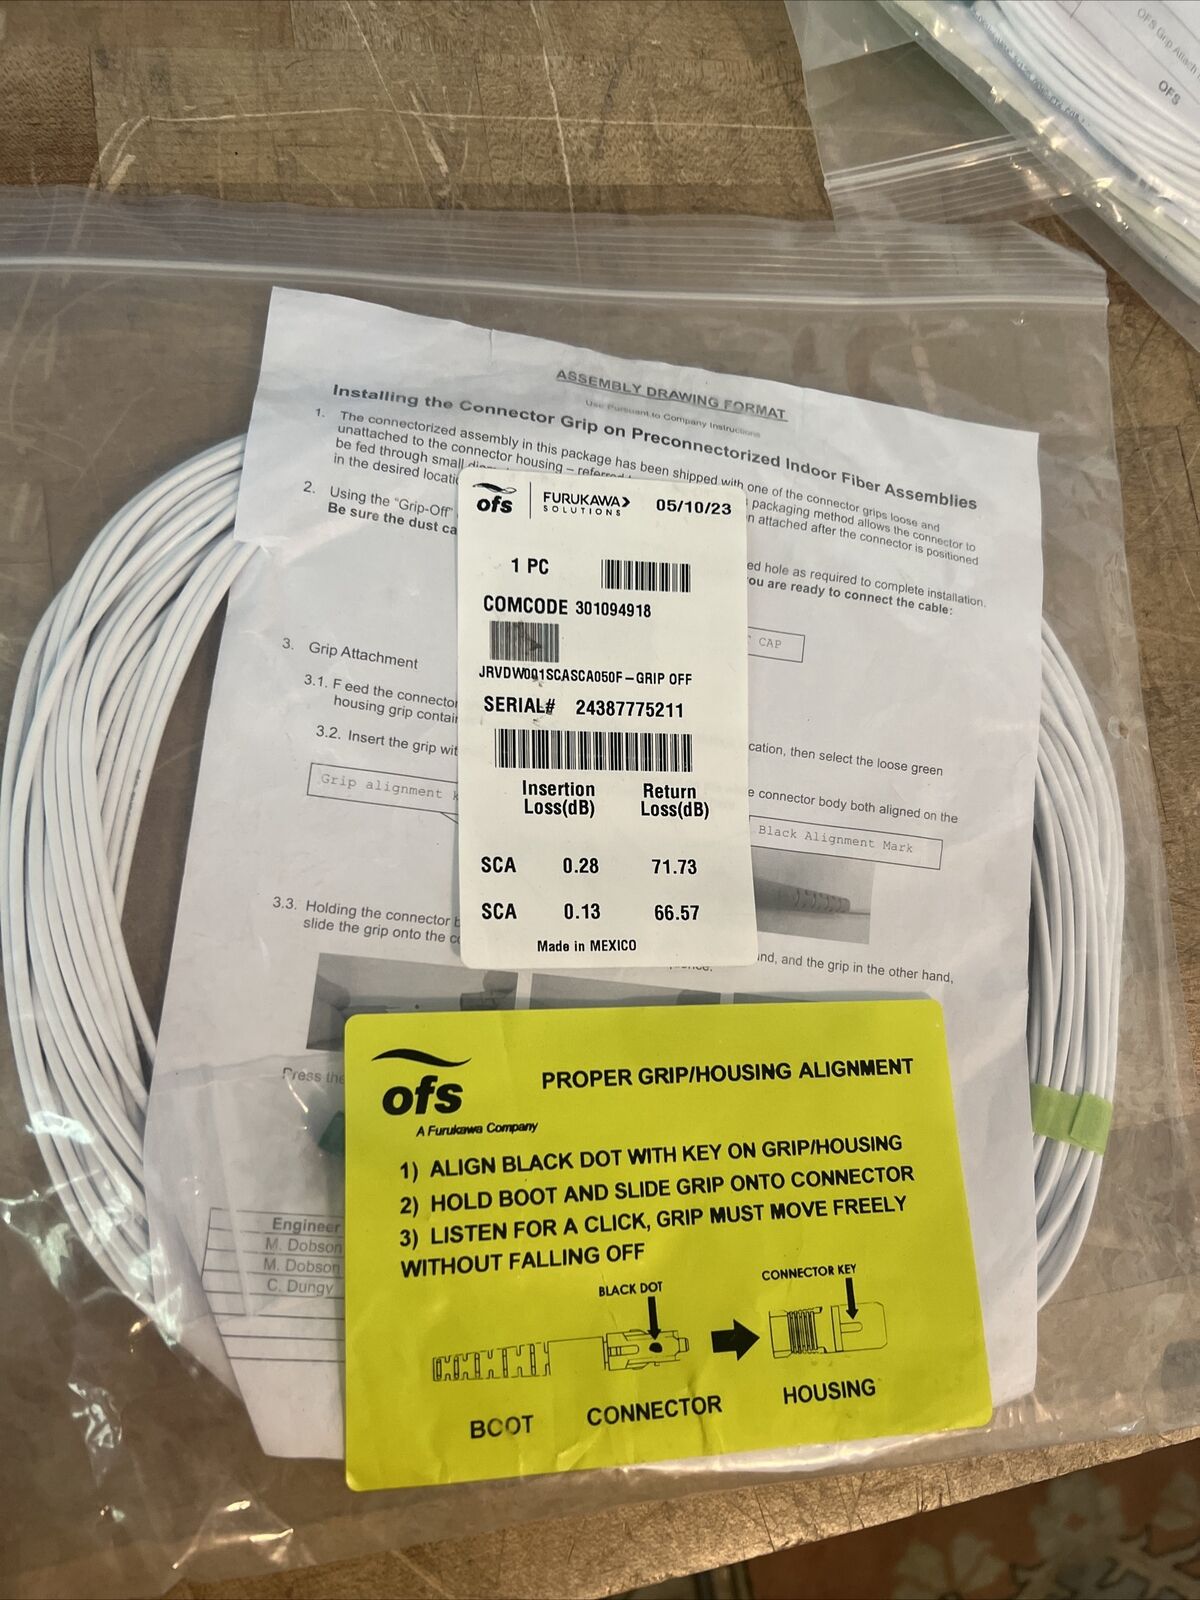 OFS indoor Preconnectorized Indoor fiber optic cable JR5DW001SCASCA050F-Grip Off